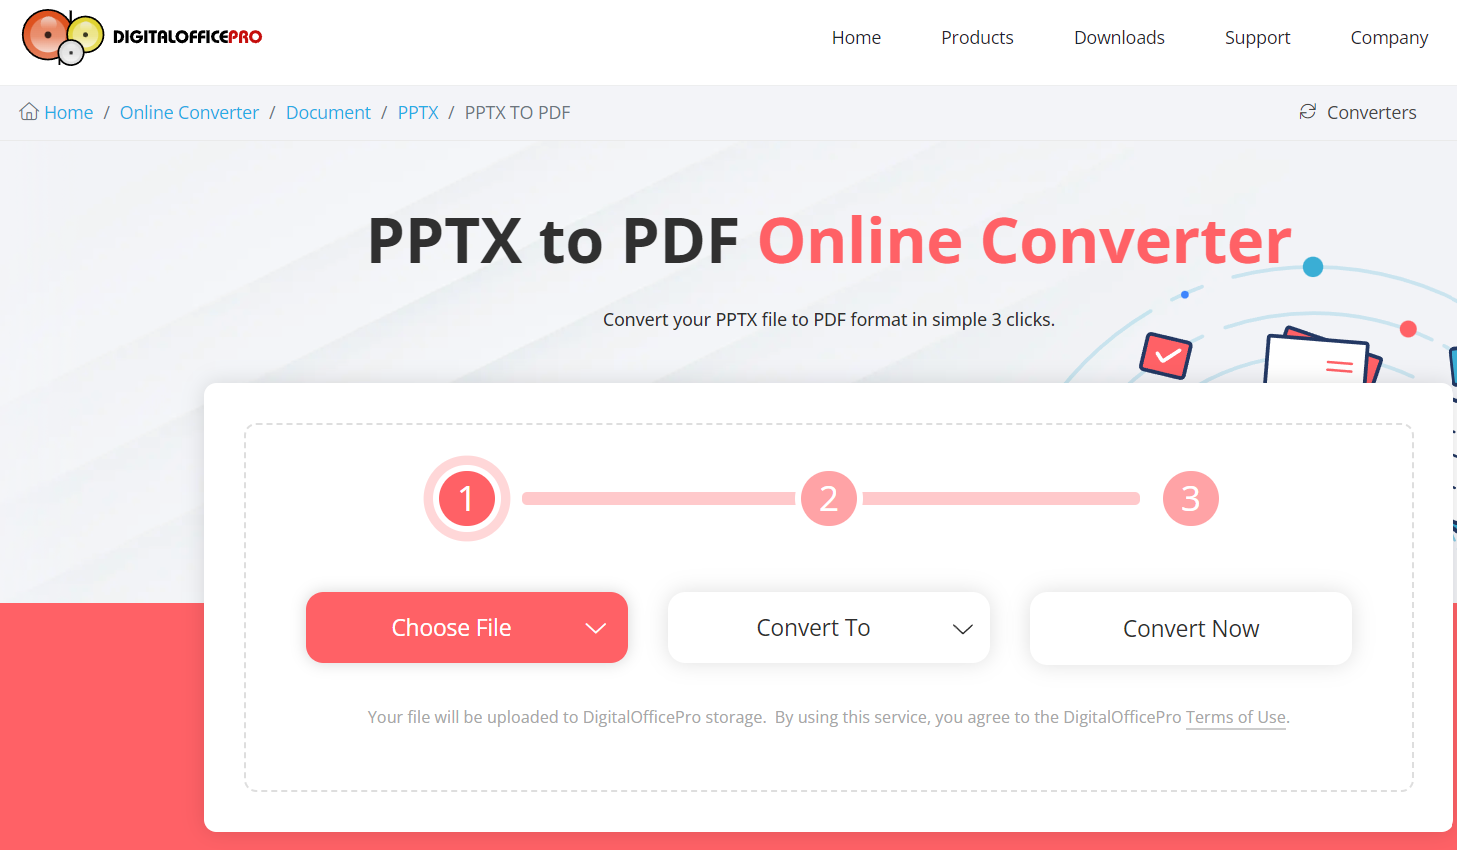 DigitalOfficePro PPTX to PDF Online Converter